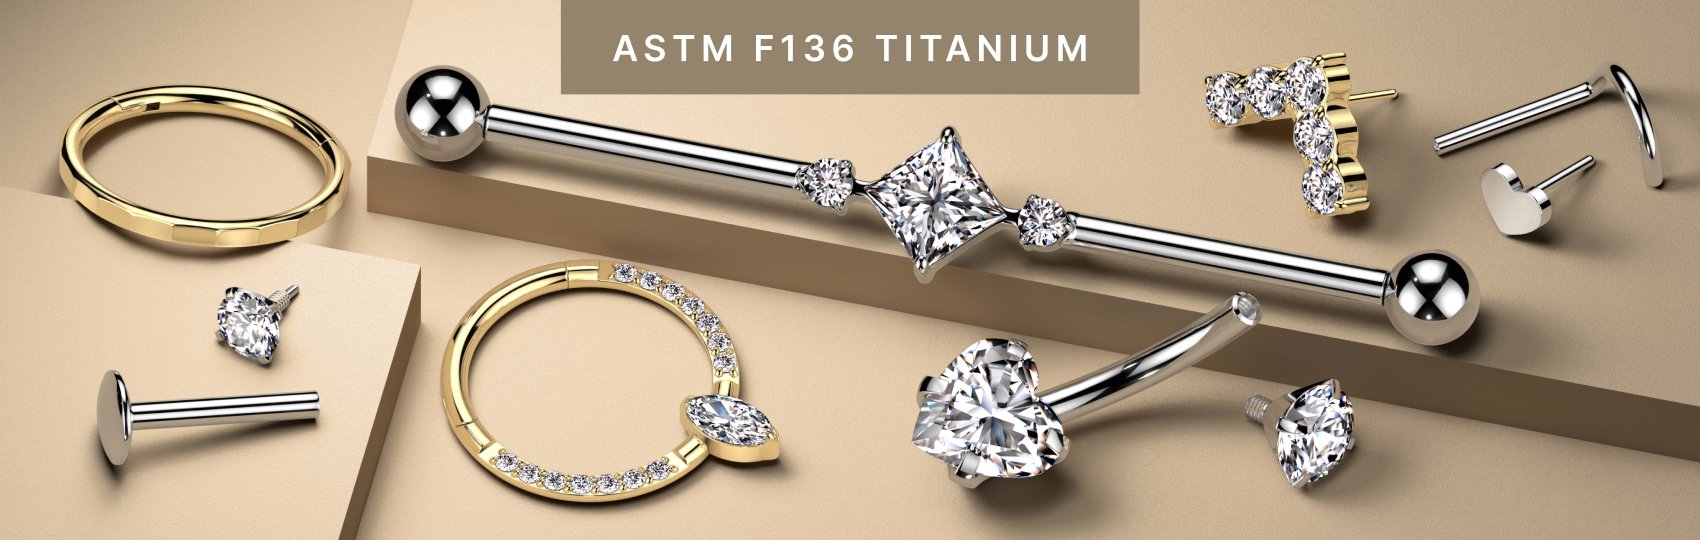 Titanium: fresh selection of ASTM F136 implant-grade titanium body jewelry.